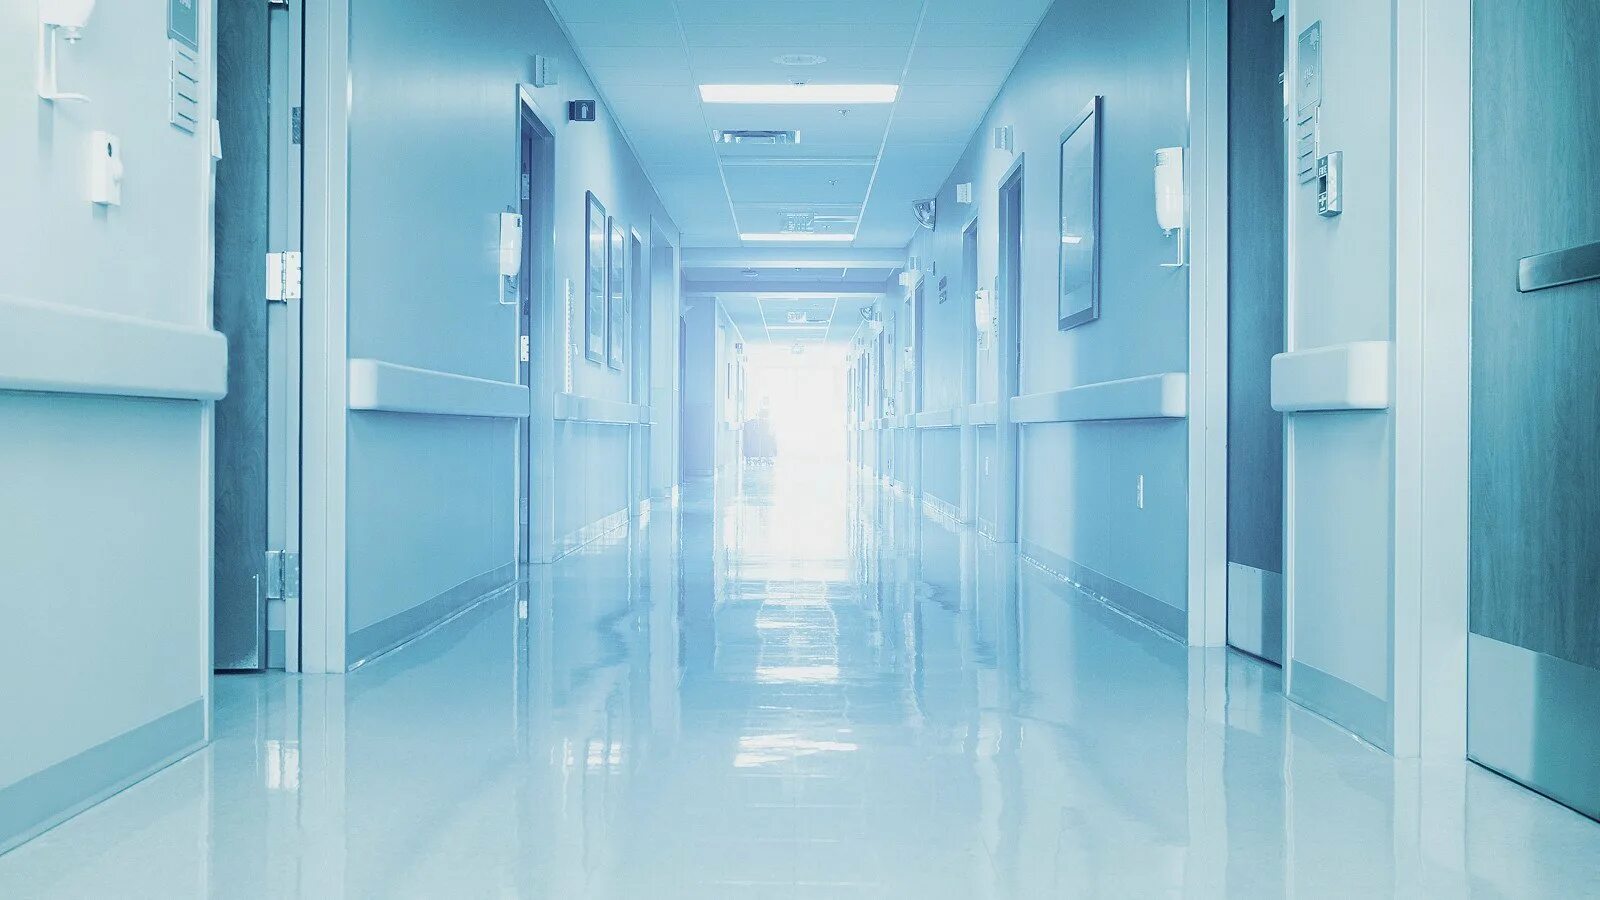 Коридор больницы. Больница фон. Больничный коридор. Пустая больница. Больница